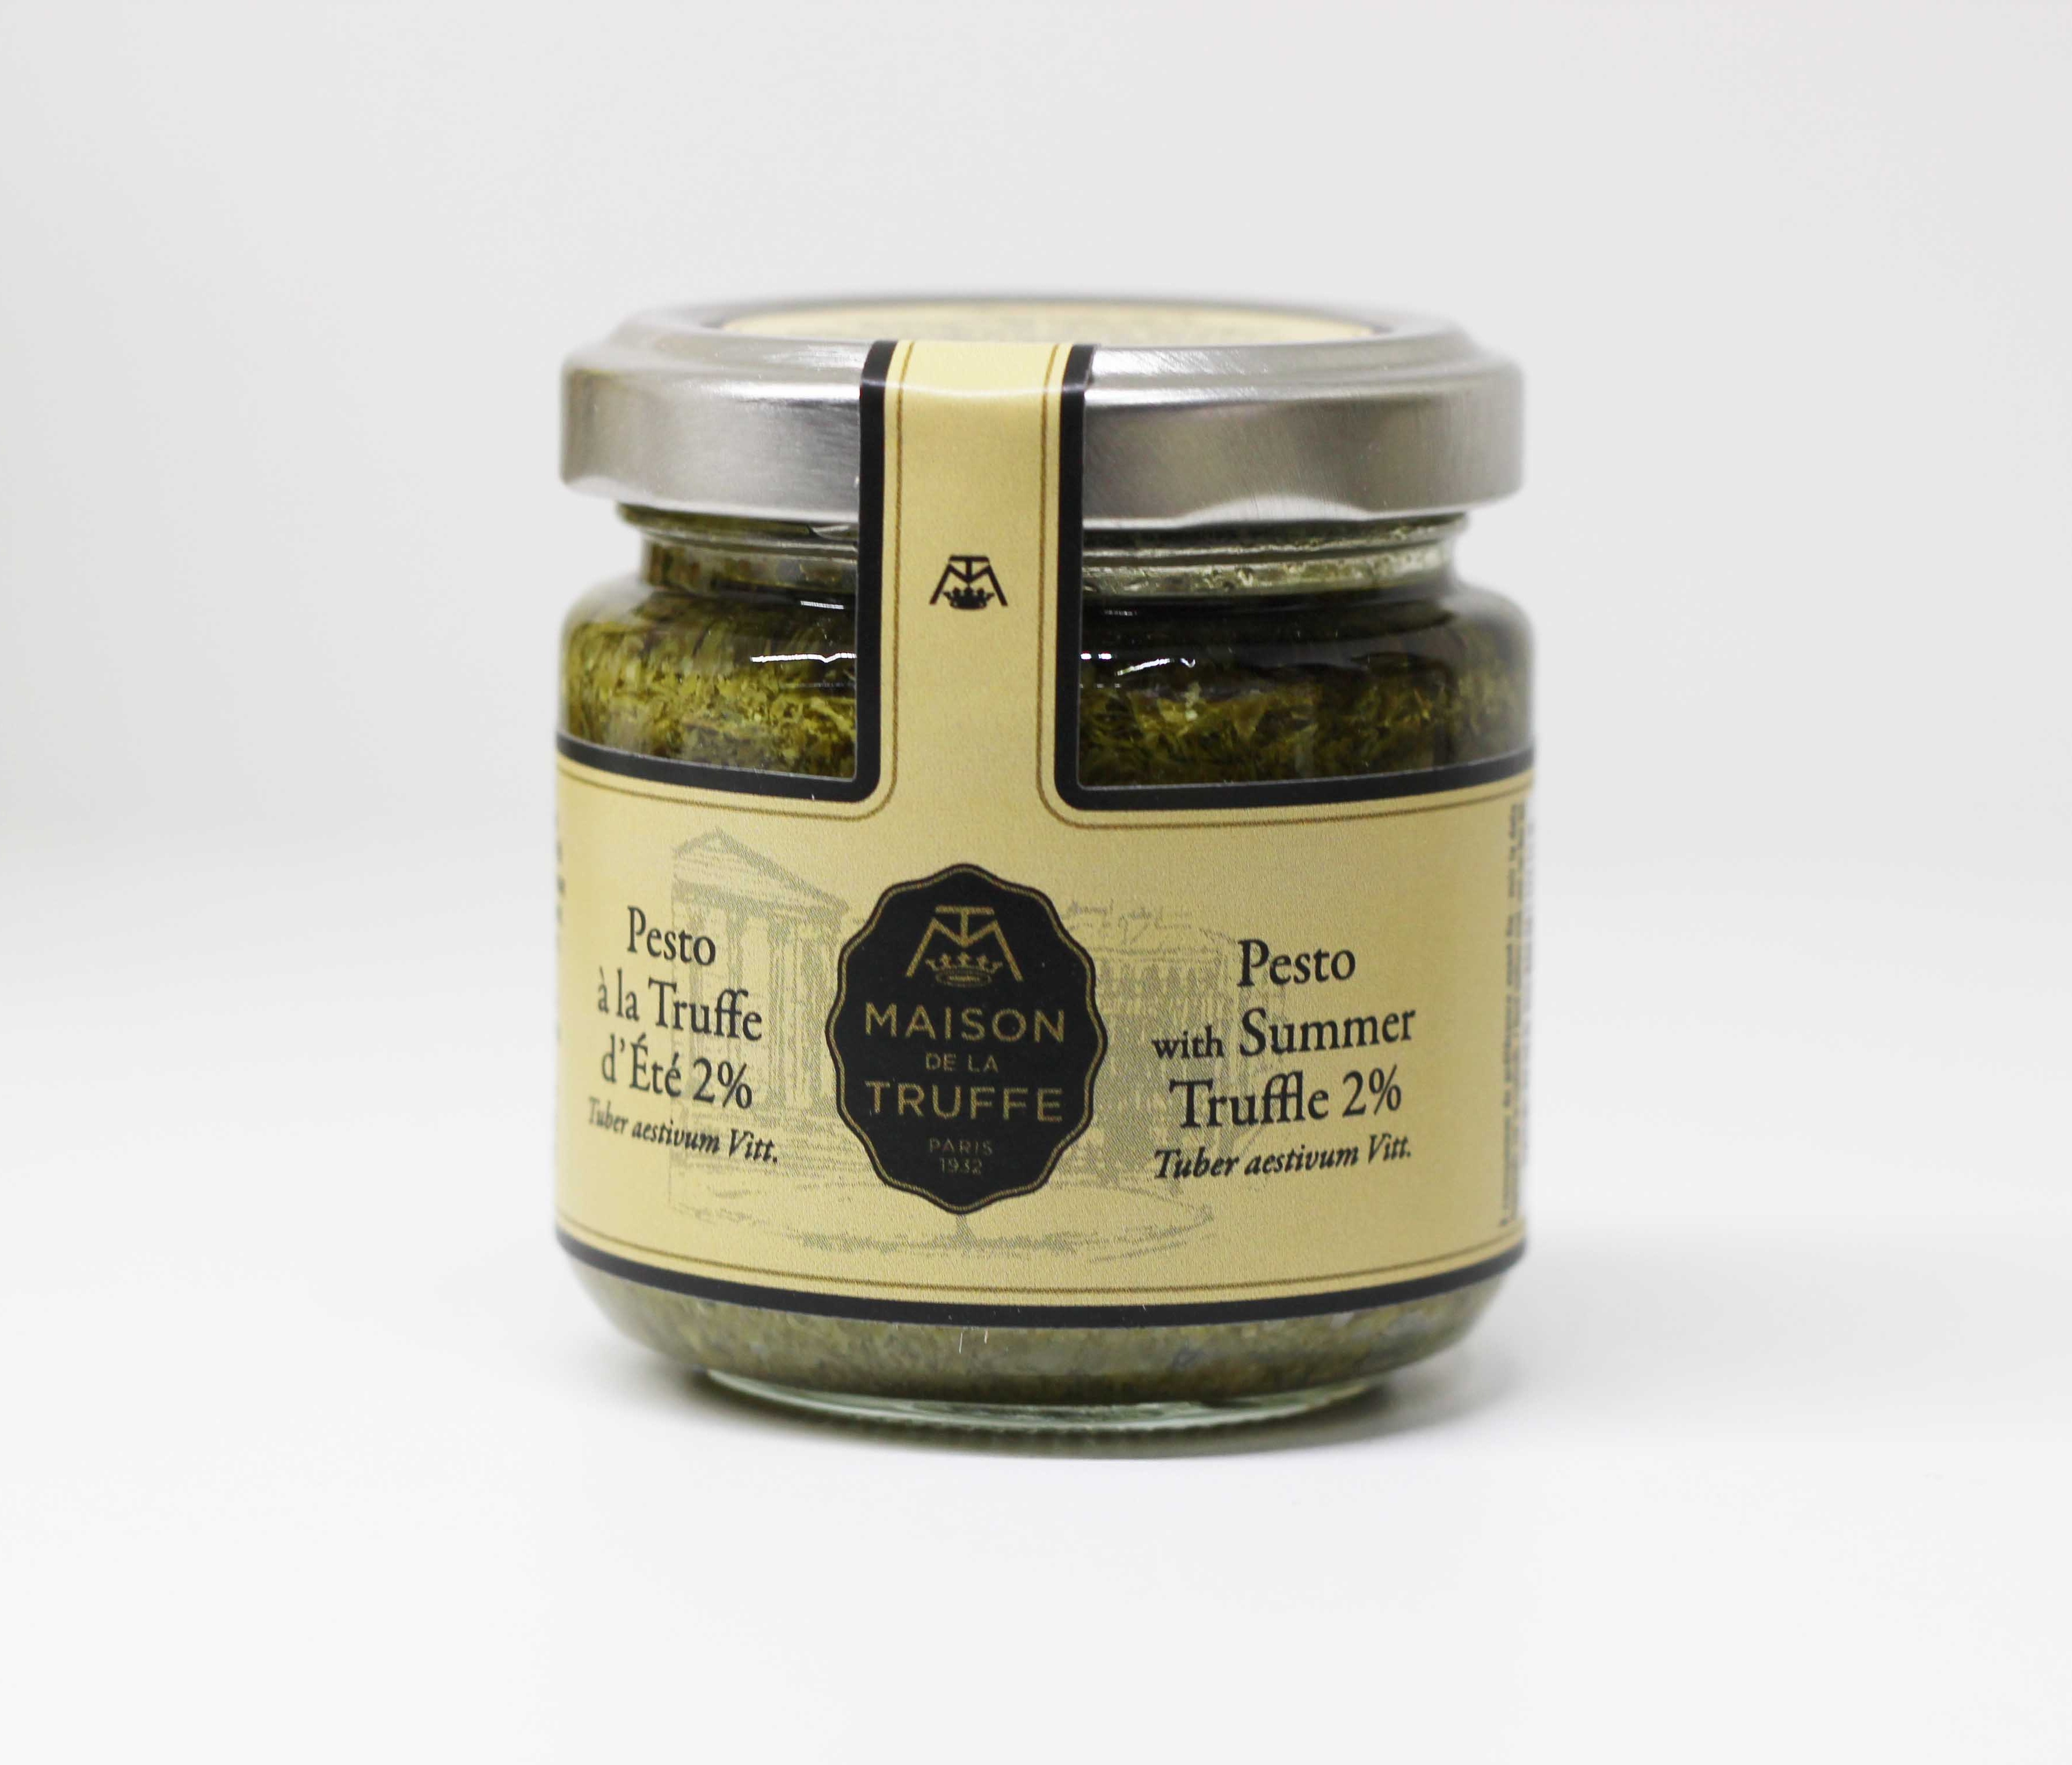 Pesto sauce with summer truffle 80g.